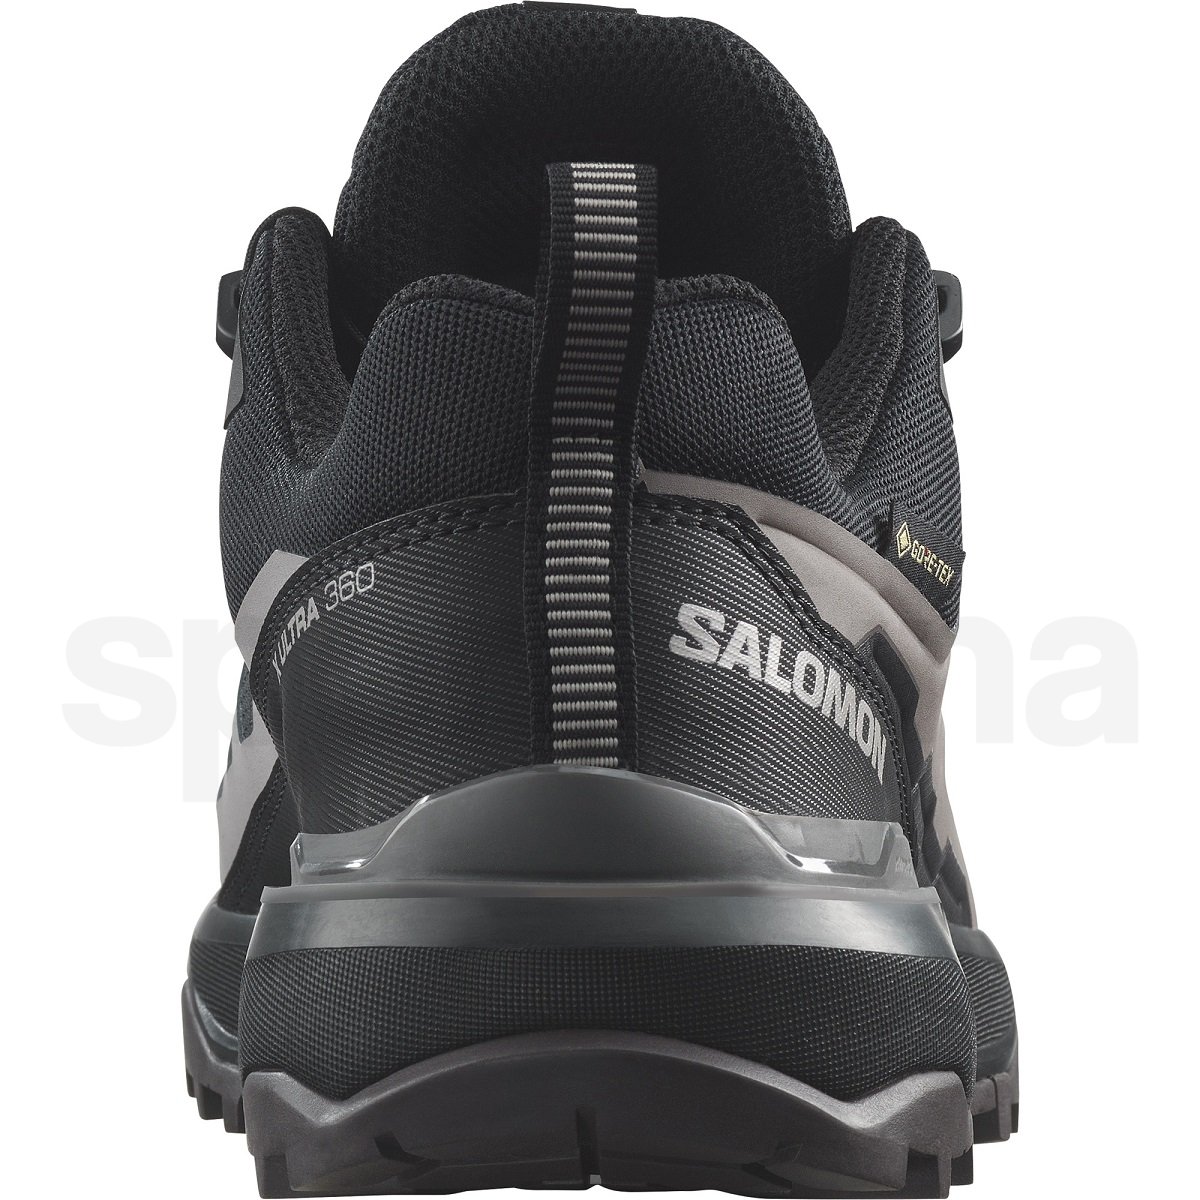 Obuv Salomon X Ultra 360 GTX W - černá